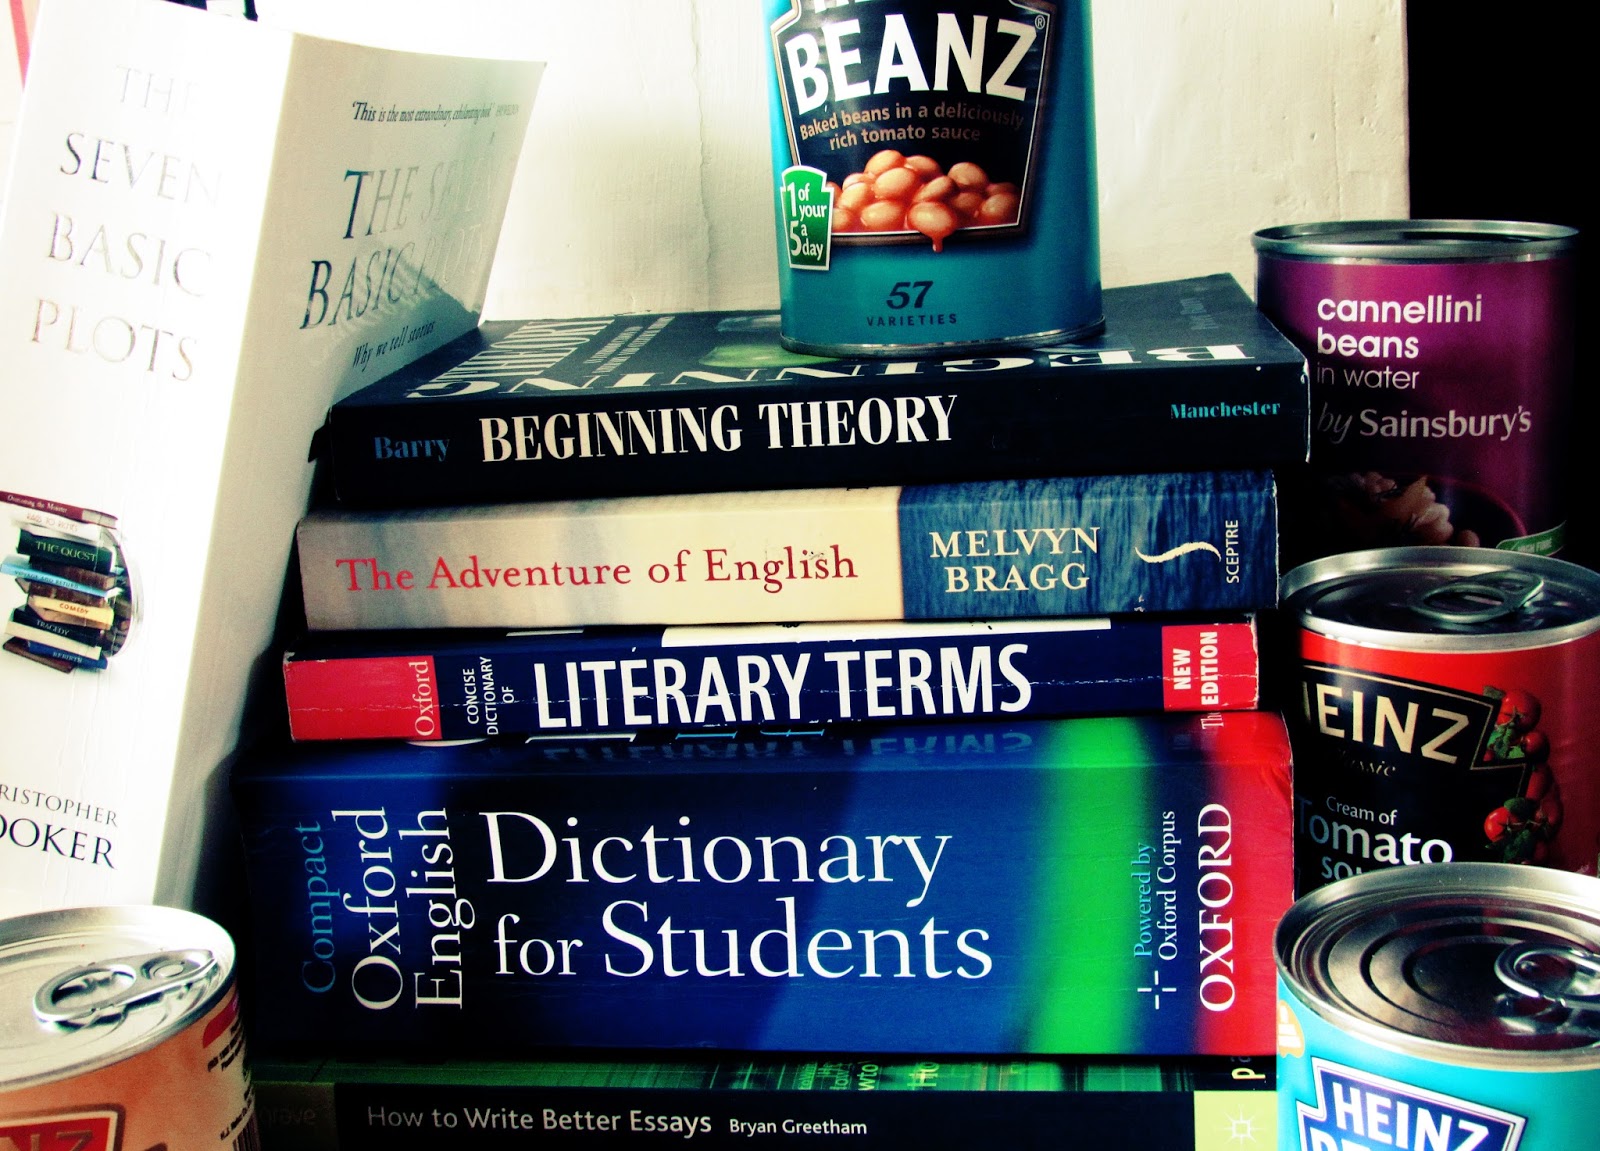 Book&aCuppa: English Literature Degree: Reading List